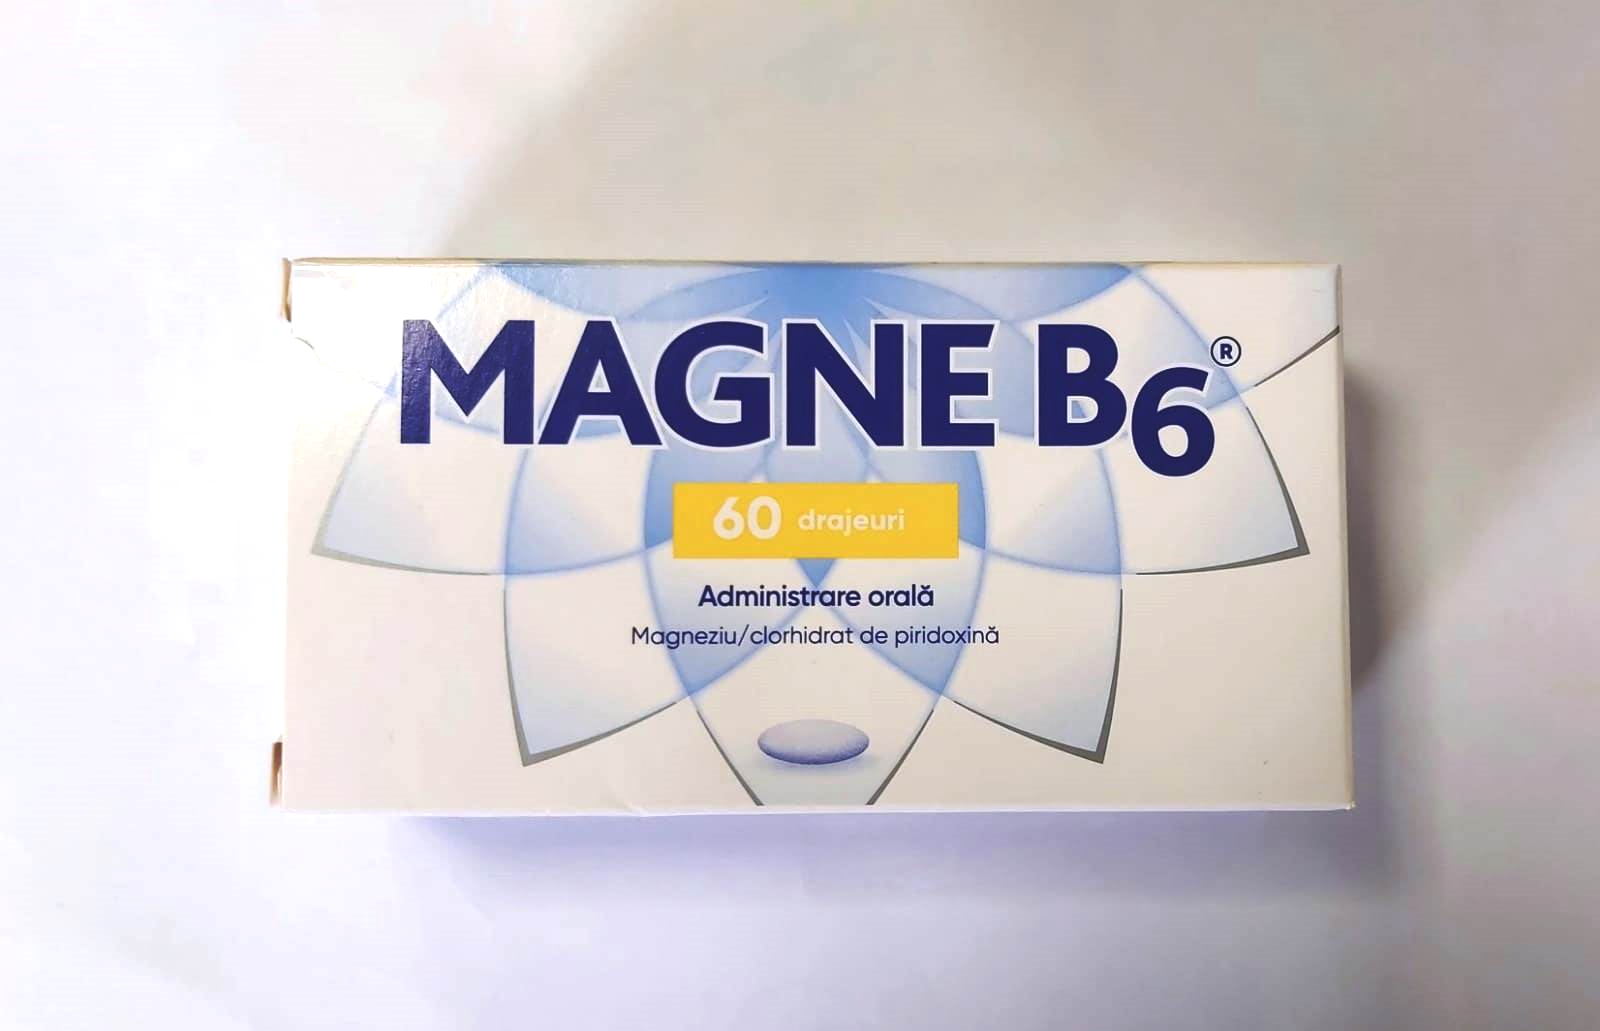 Afectiuni neurovegetative - Magne B6, 60 drajeuri, farmacieieftina.ro